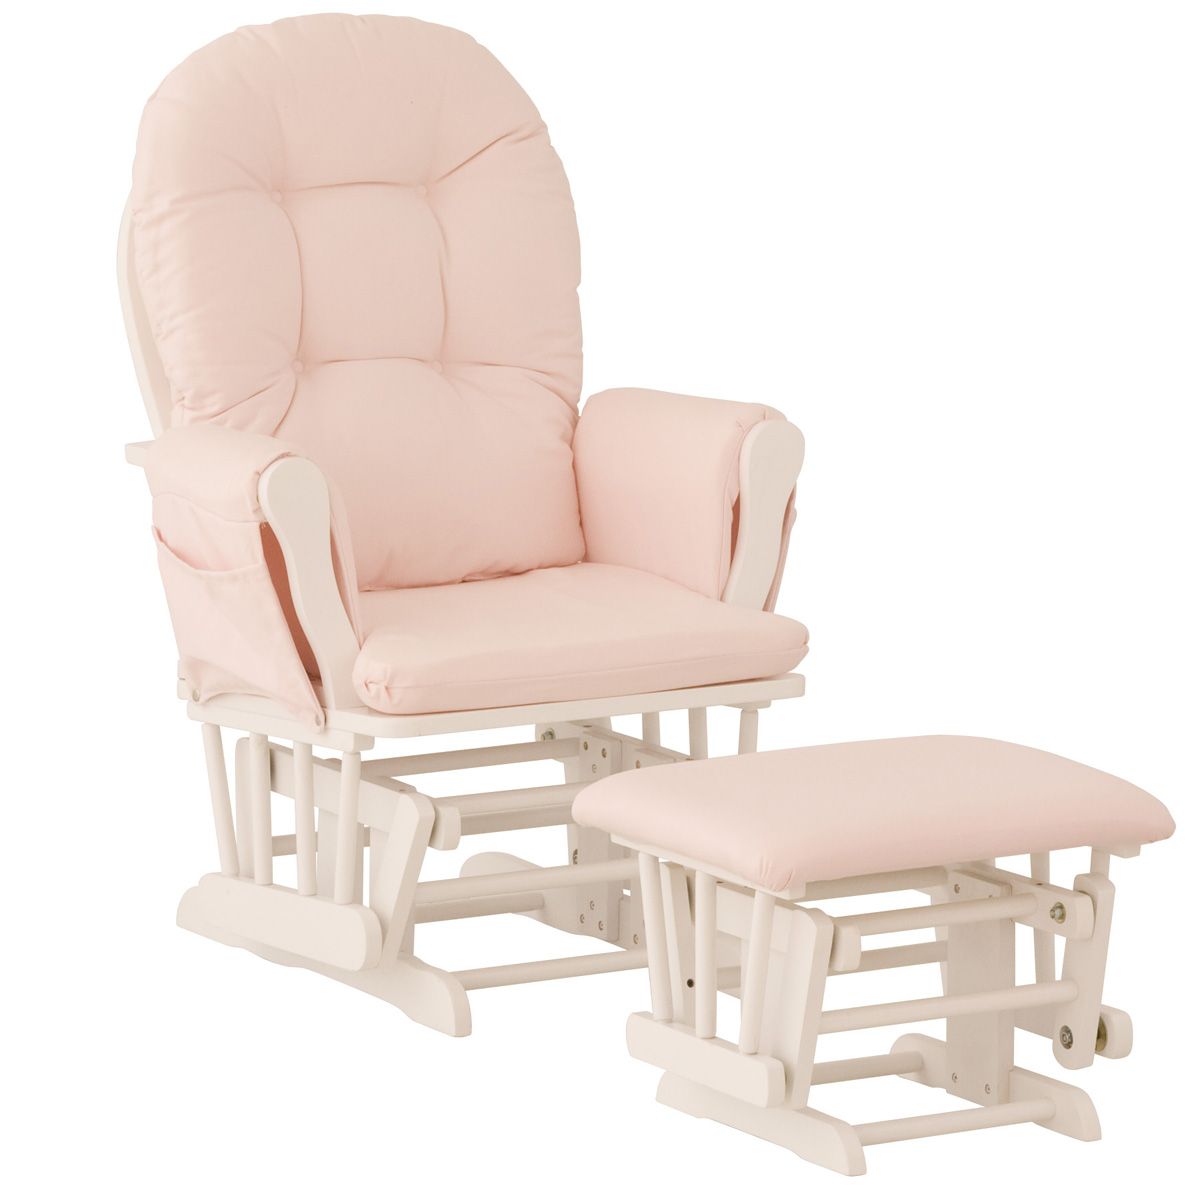 nursery rocking chair with ottoman